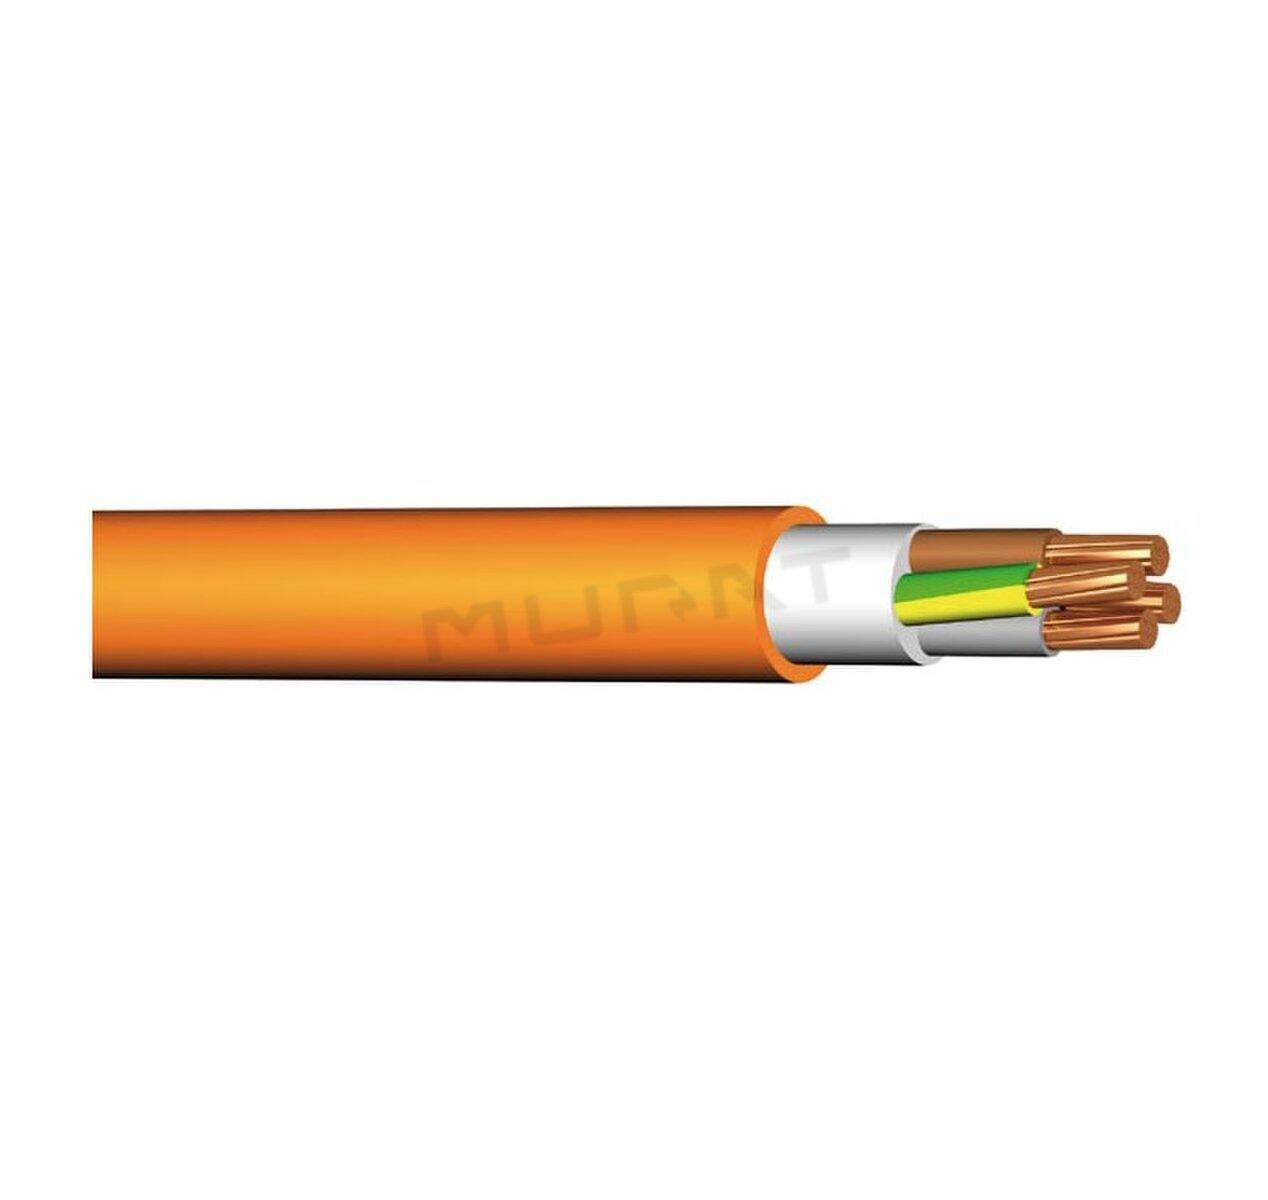 Kábel PRAFlaSafe X-J 4x150 mm2 SM B2ca s1d1a1